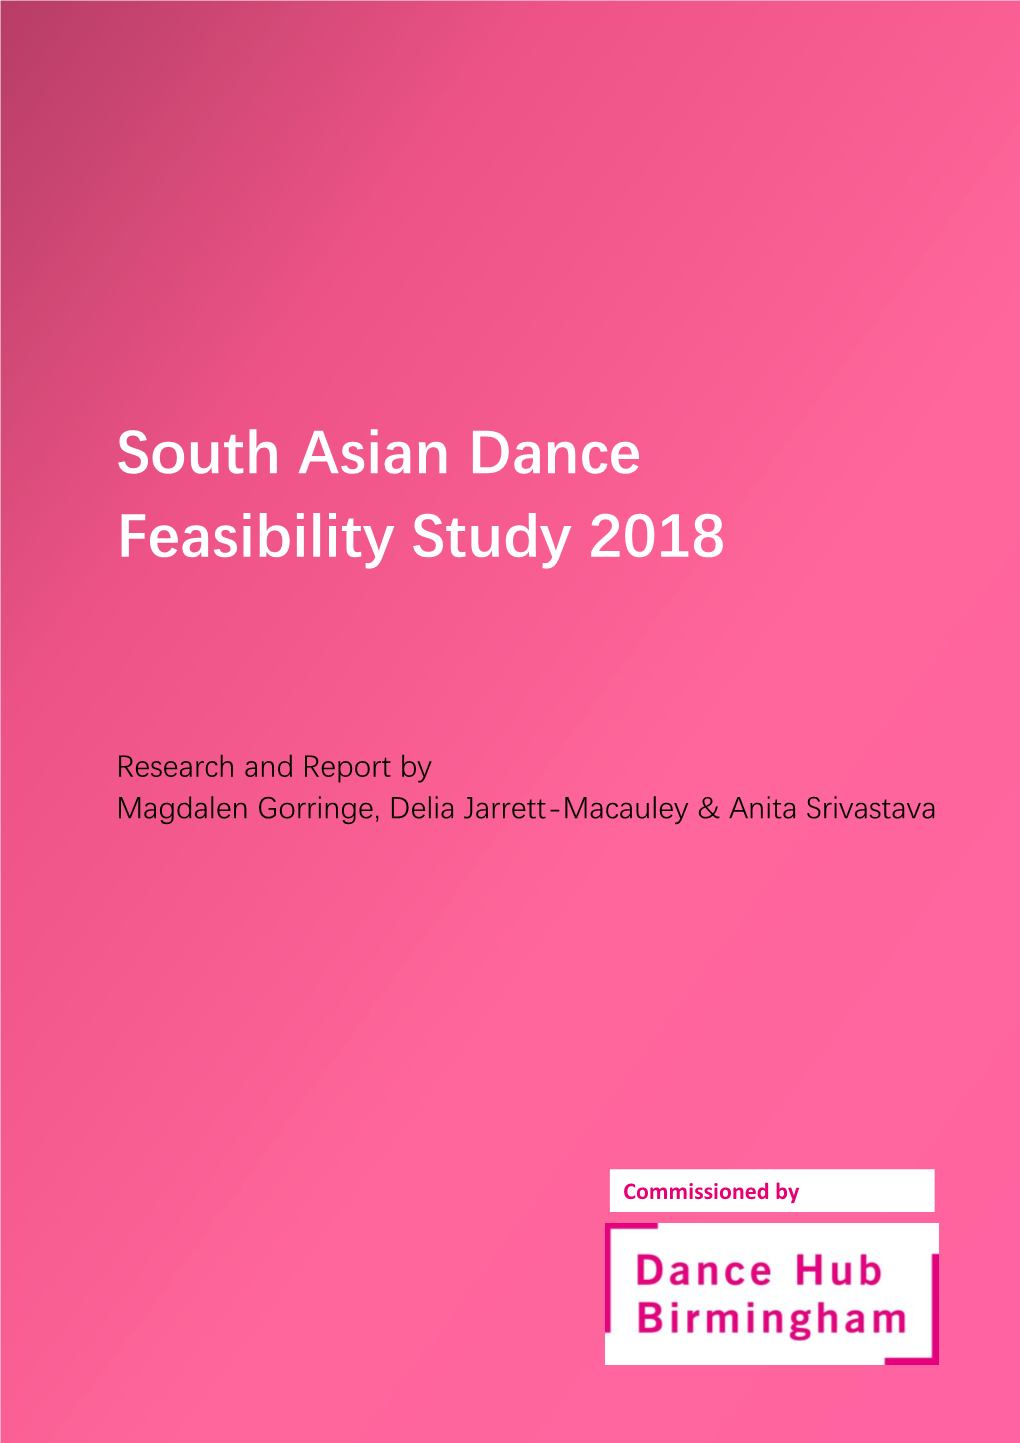 South Asian Dance Feasibility Study 2018